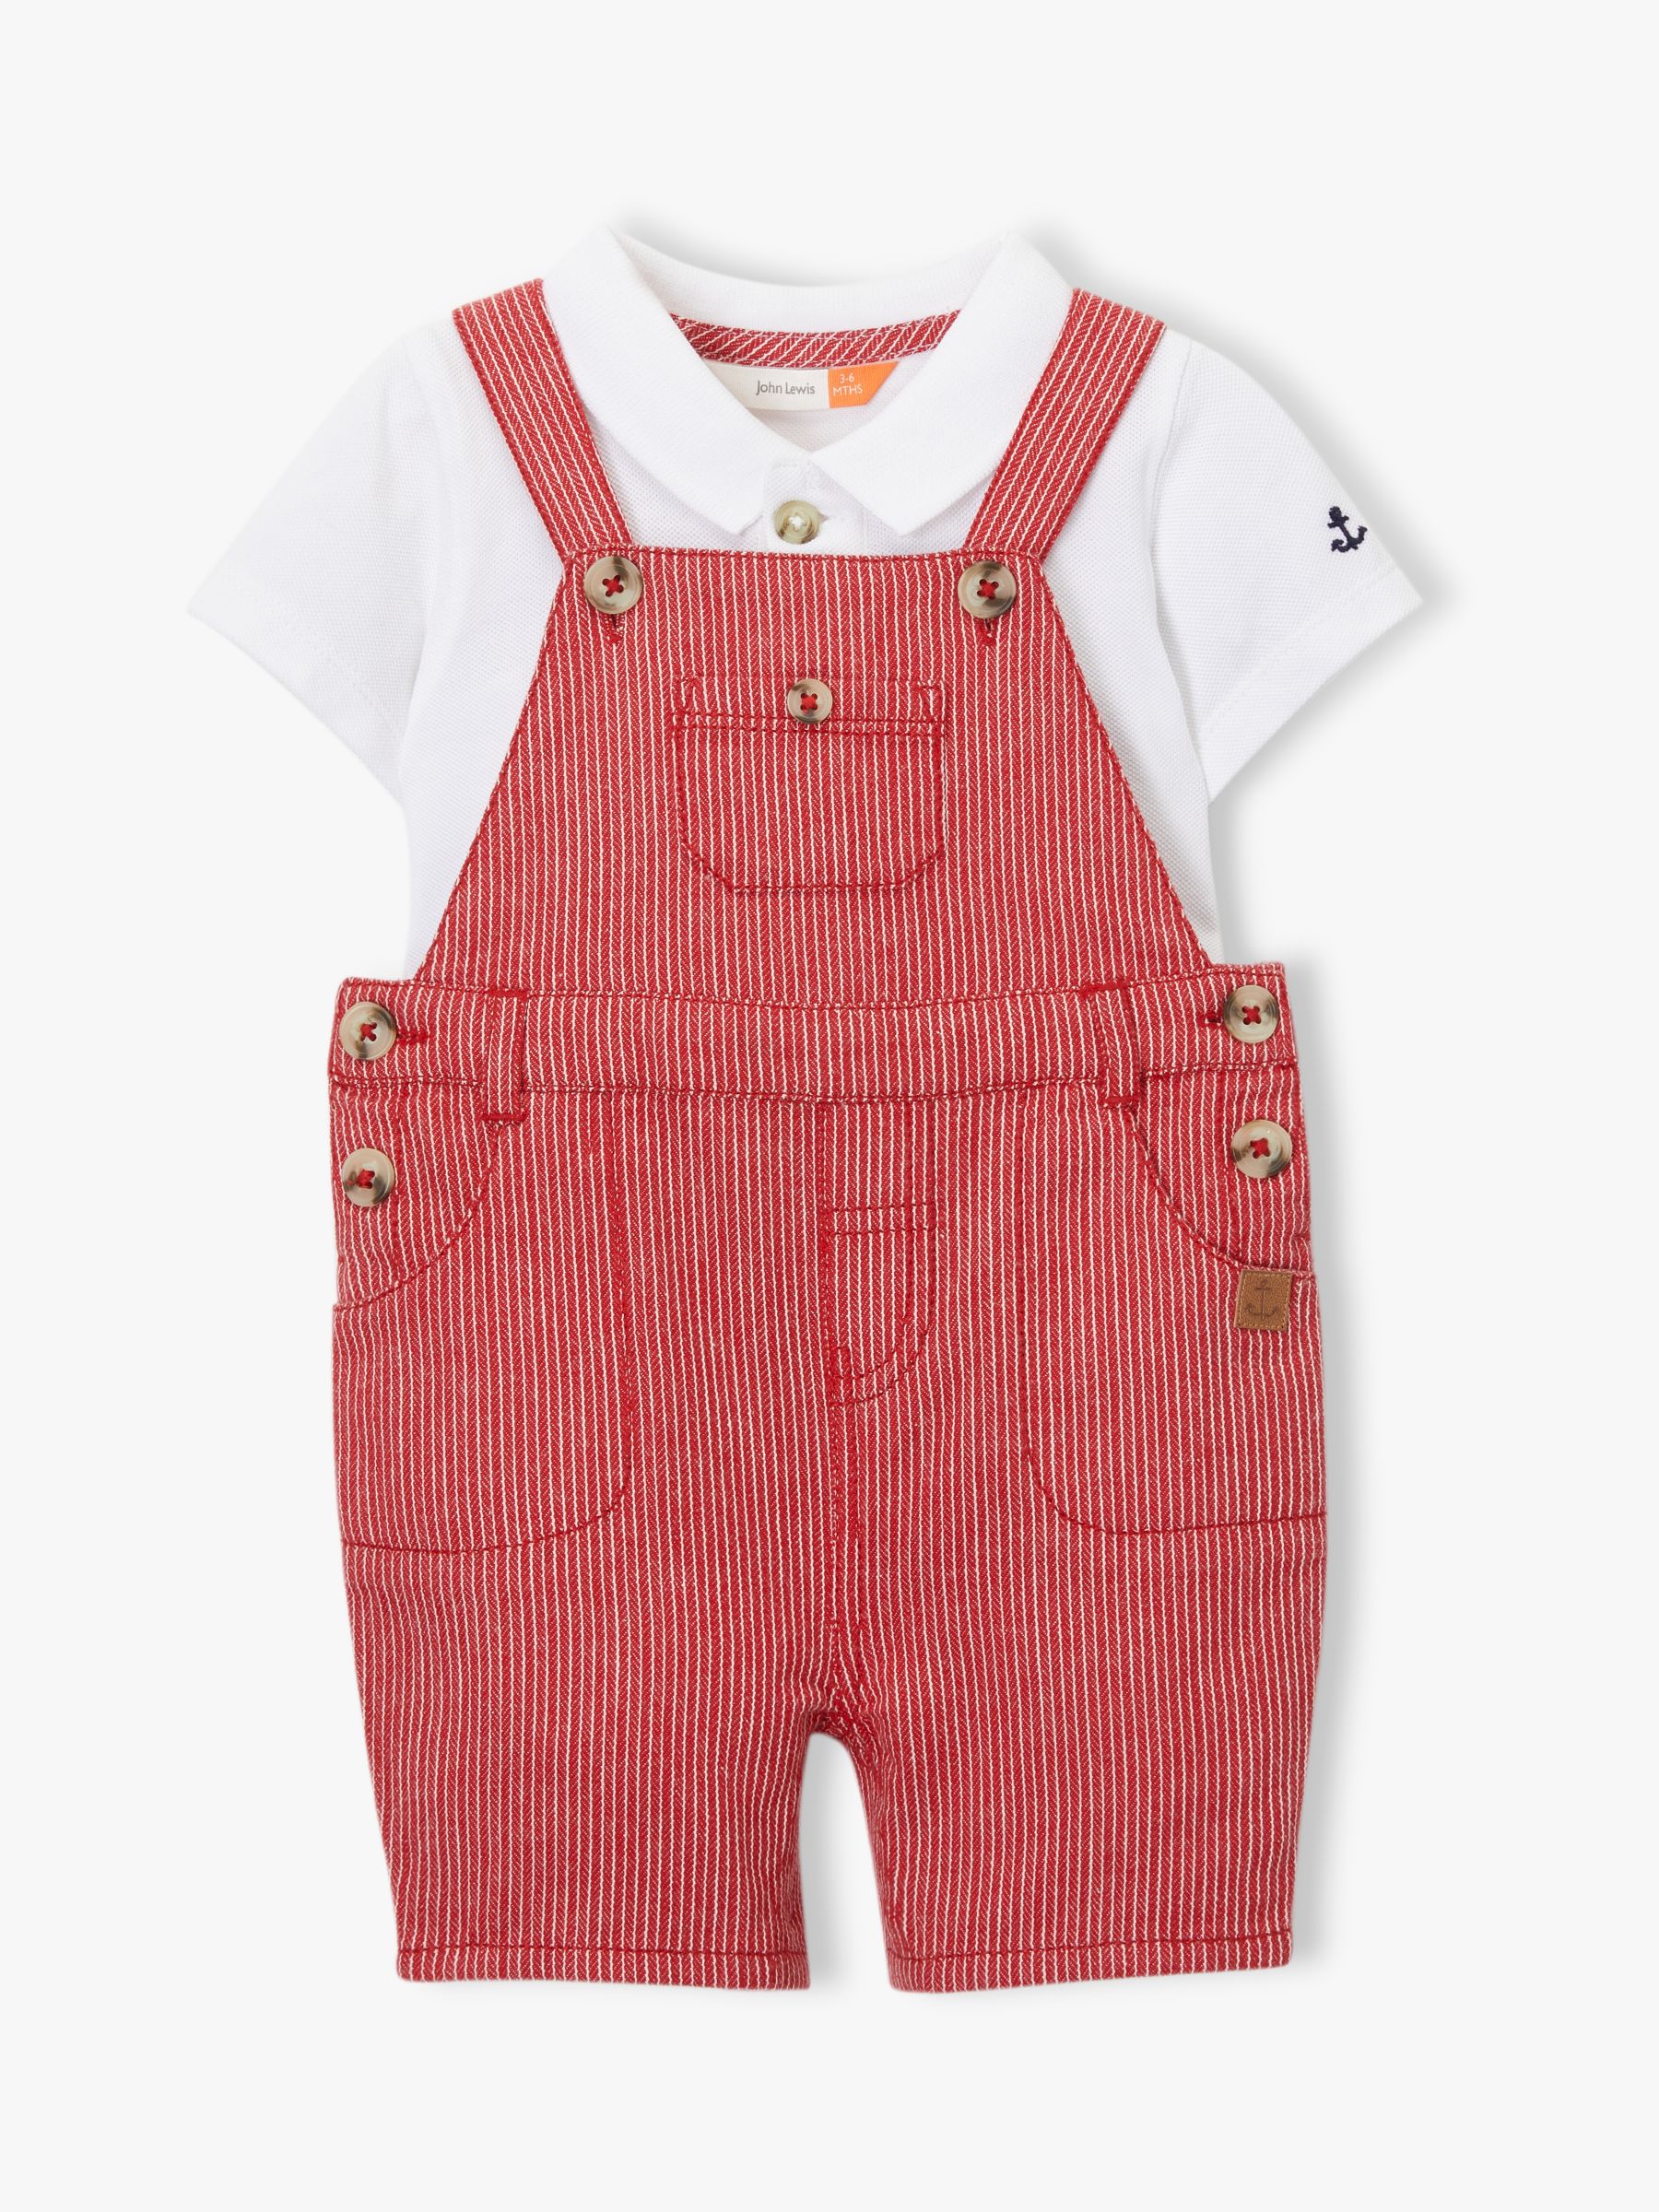 John Lewis & Partners Baby Stripe Dungaree and T-Shirt Set, Red